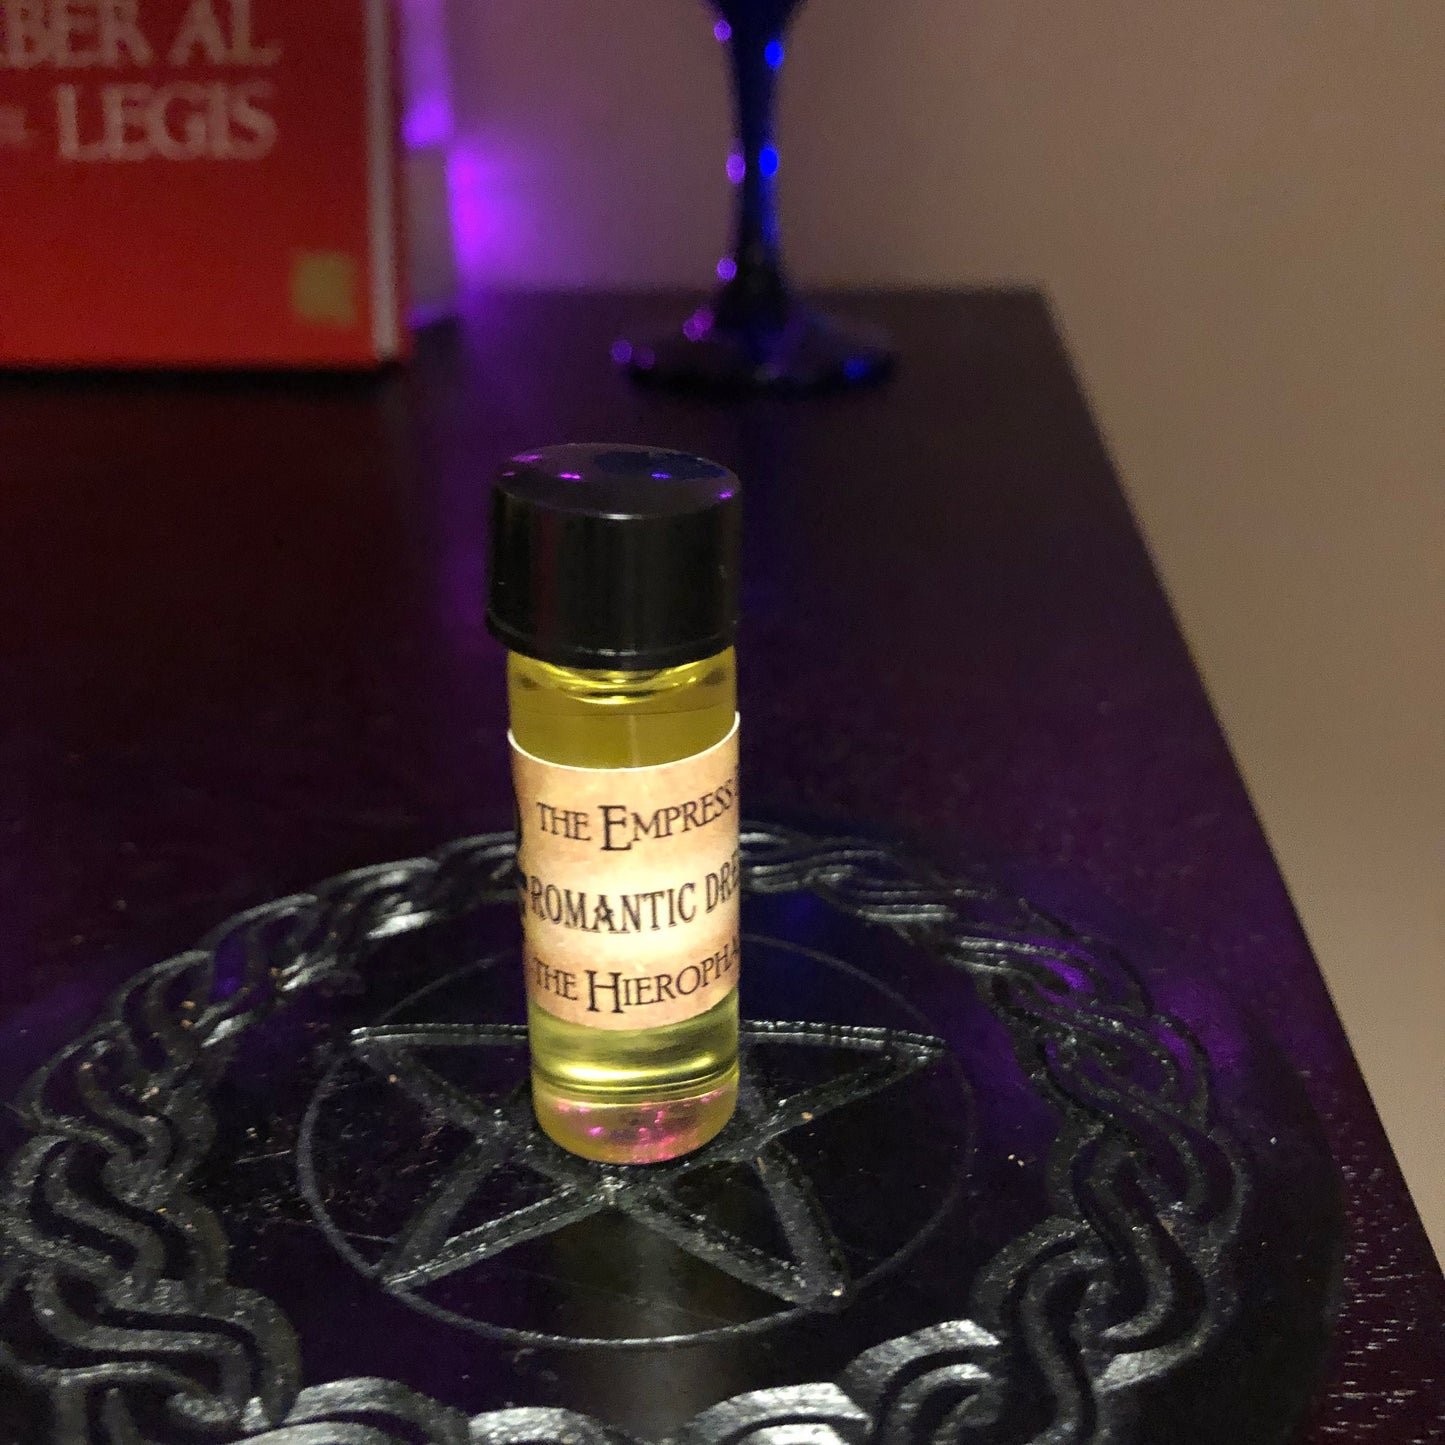 Romantic Dreams Oil (Thelemic Magick Oil)